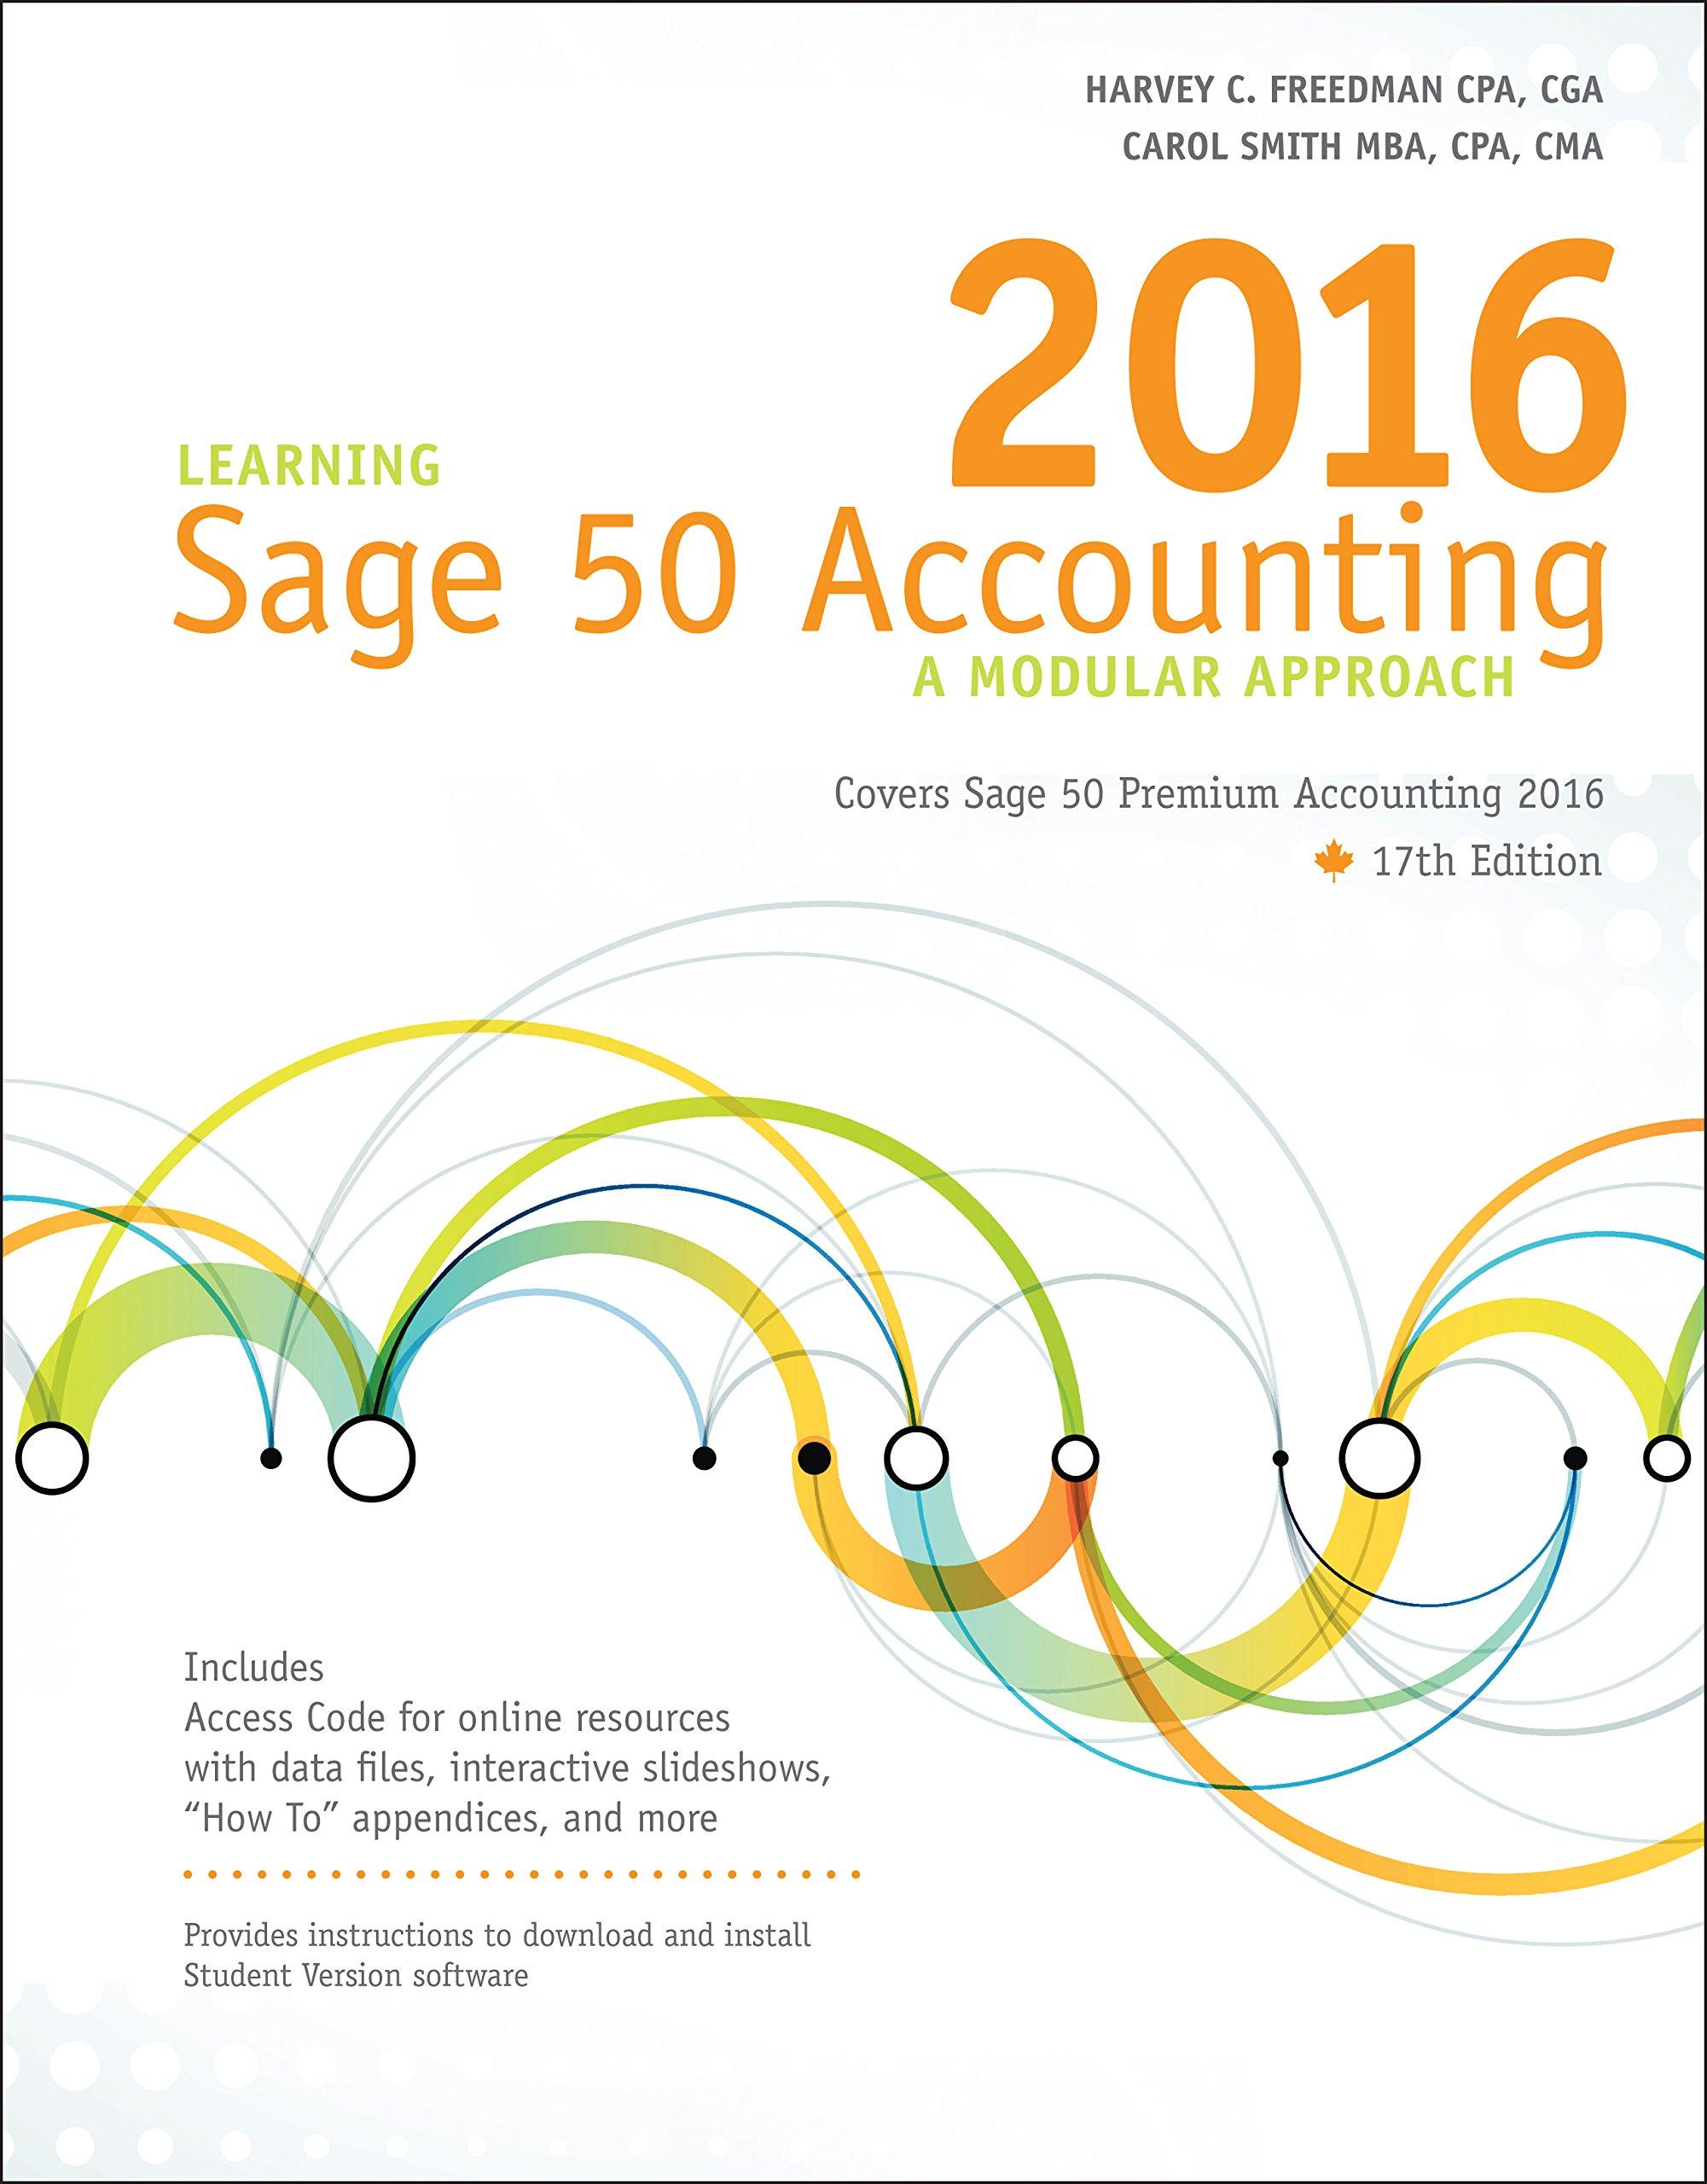 learning sage 50 accounting 2016 a modular approach 17th edition harvey freedman 0176768092, 9780176768096